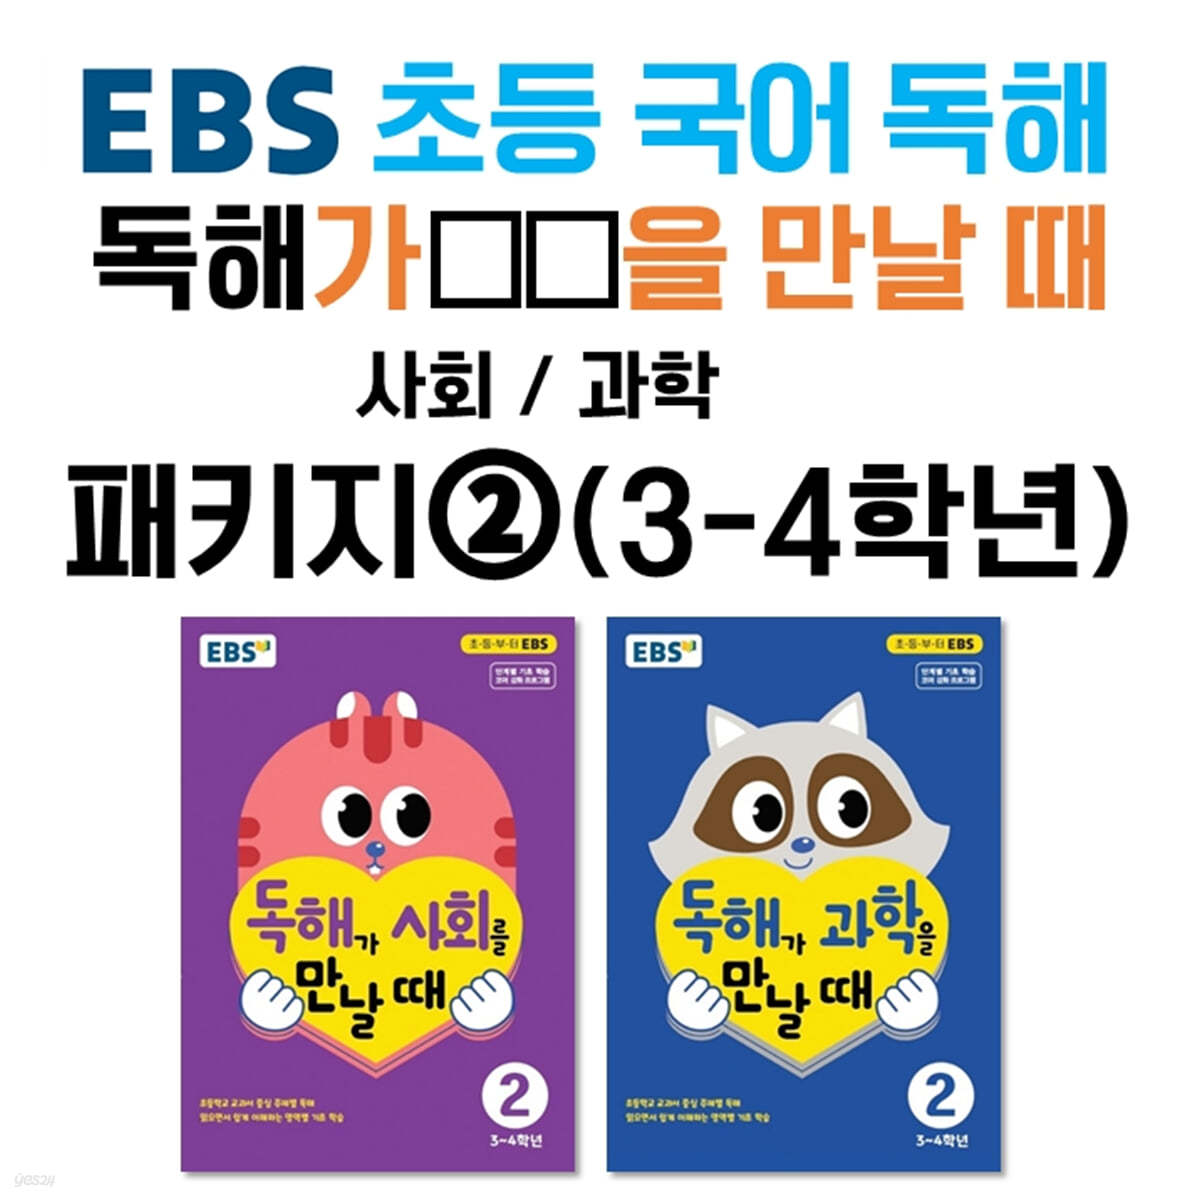 EBS 초등 국어 독해 독해가 ㅇㅇ을 만날 때 패키지② (3~4학년)  